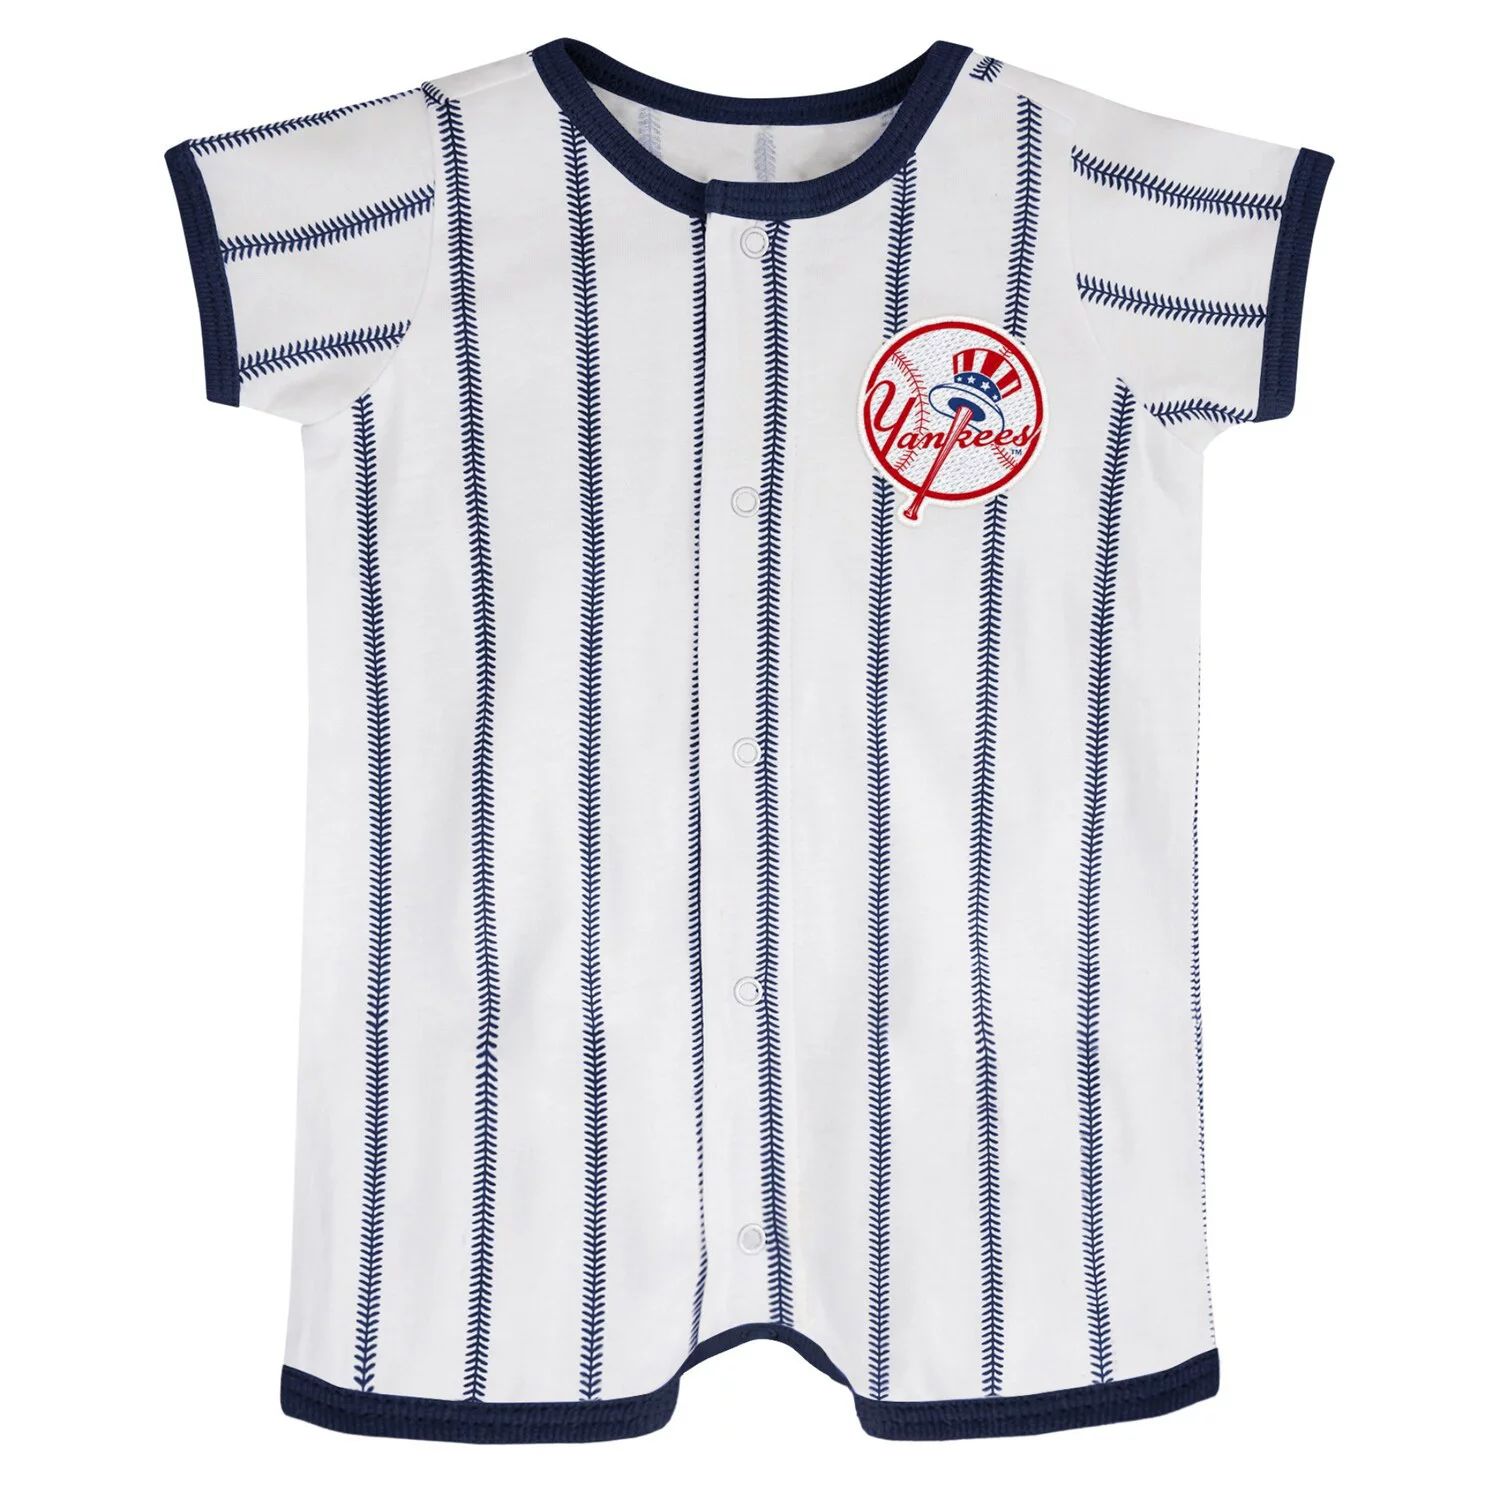 Белый/темно-синий джемпер с короткими рукавами для новорожденных New York Yankees Power Hitter Outerstuff белый темно синий джемпер с короткими рукавами для новорожденных detroit tigers power hitter outerstuff